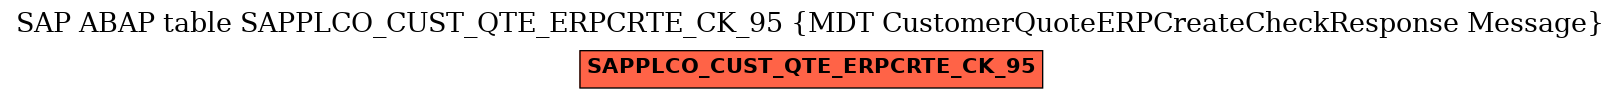 E-R Diagram for table SAPPLCO_CUST_QTE_ERPCRTE_CK_95 (MDT CustomerQuoteERPCreateCheckResponse Message)